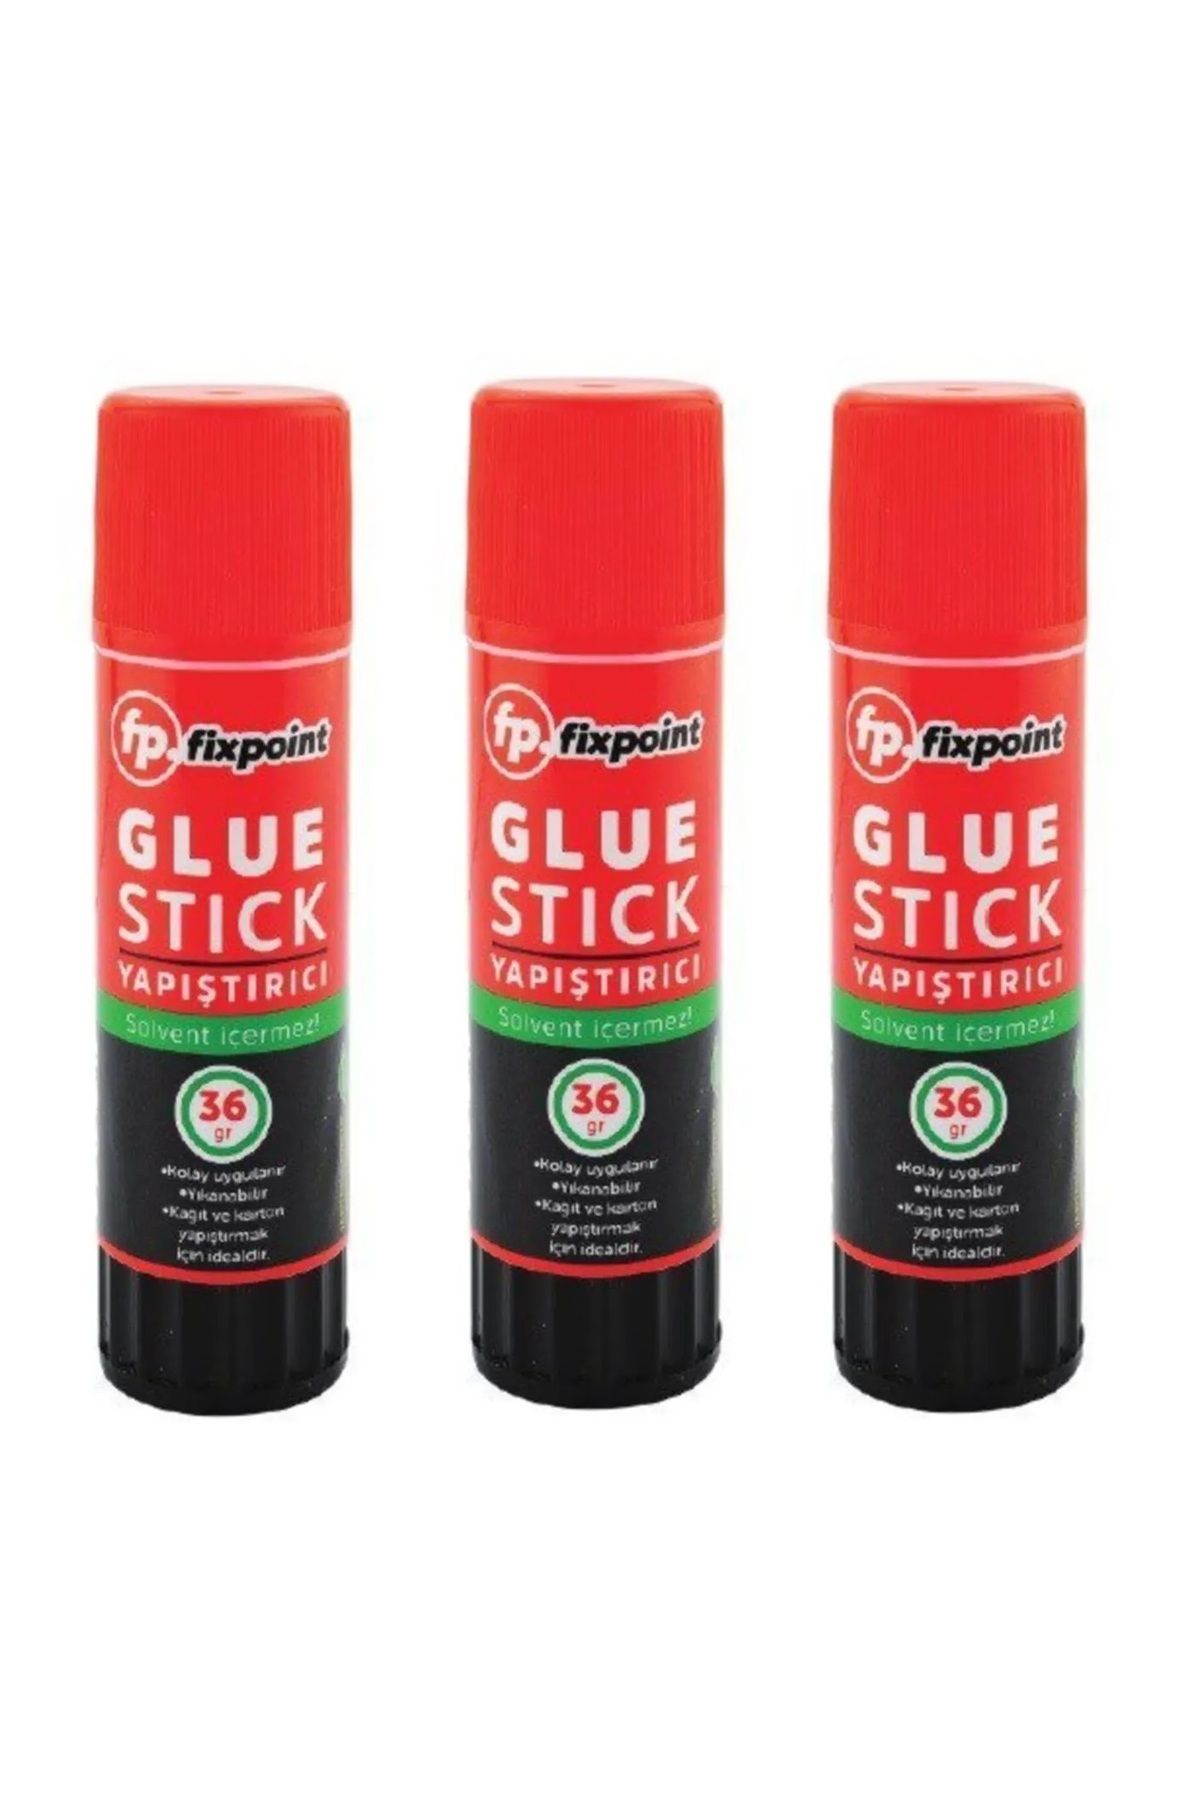 FixPoint Glue Stick Yapıştırıcı 36gr (3 Adet)